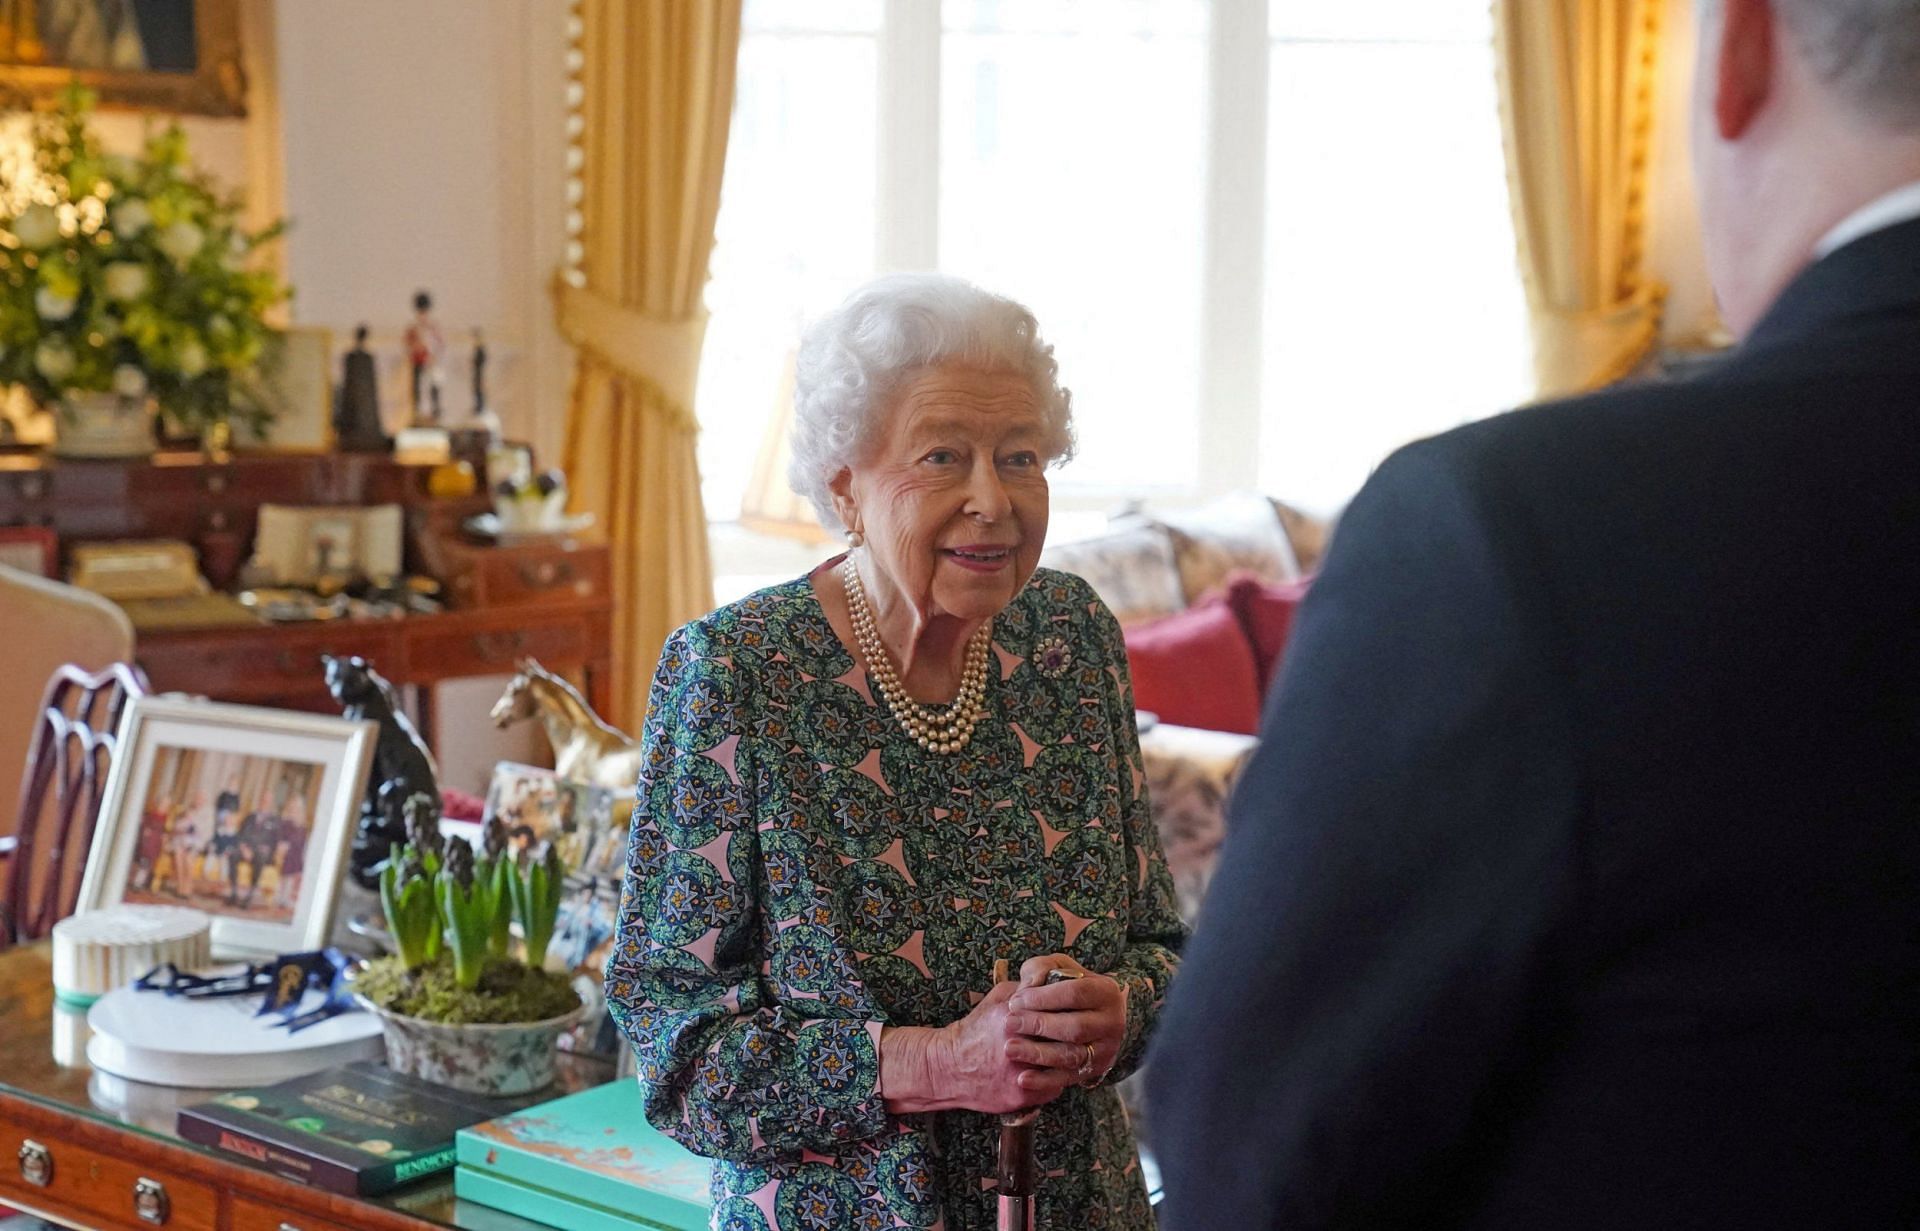 Her Majesty to make Windsor Castle her permanent address (Image via Reuters)